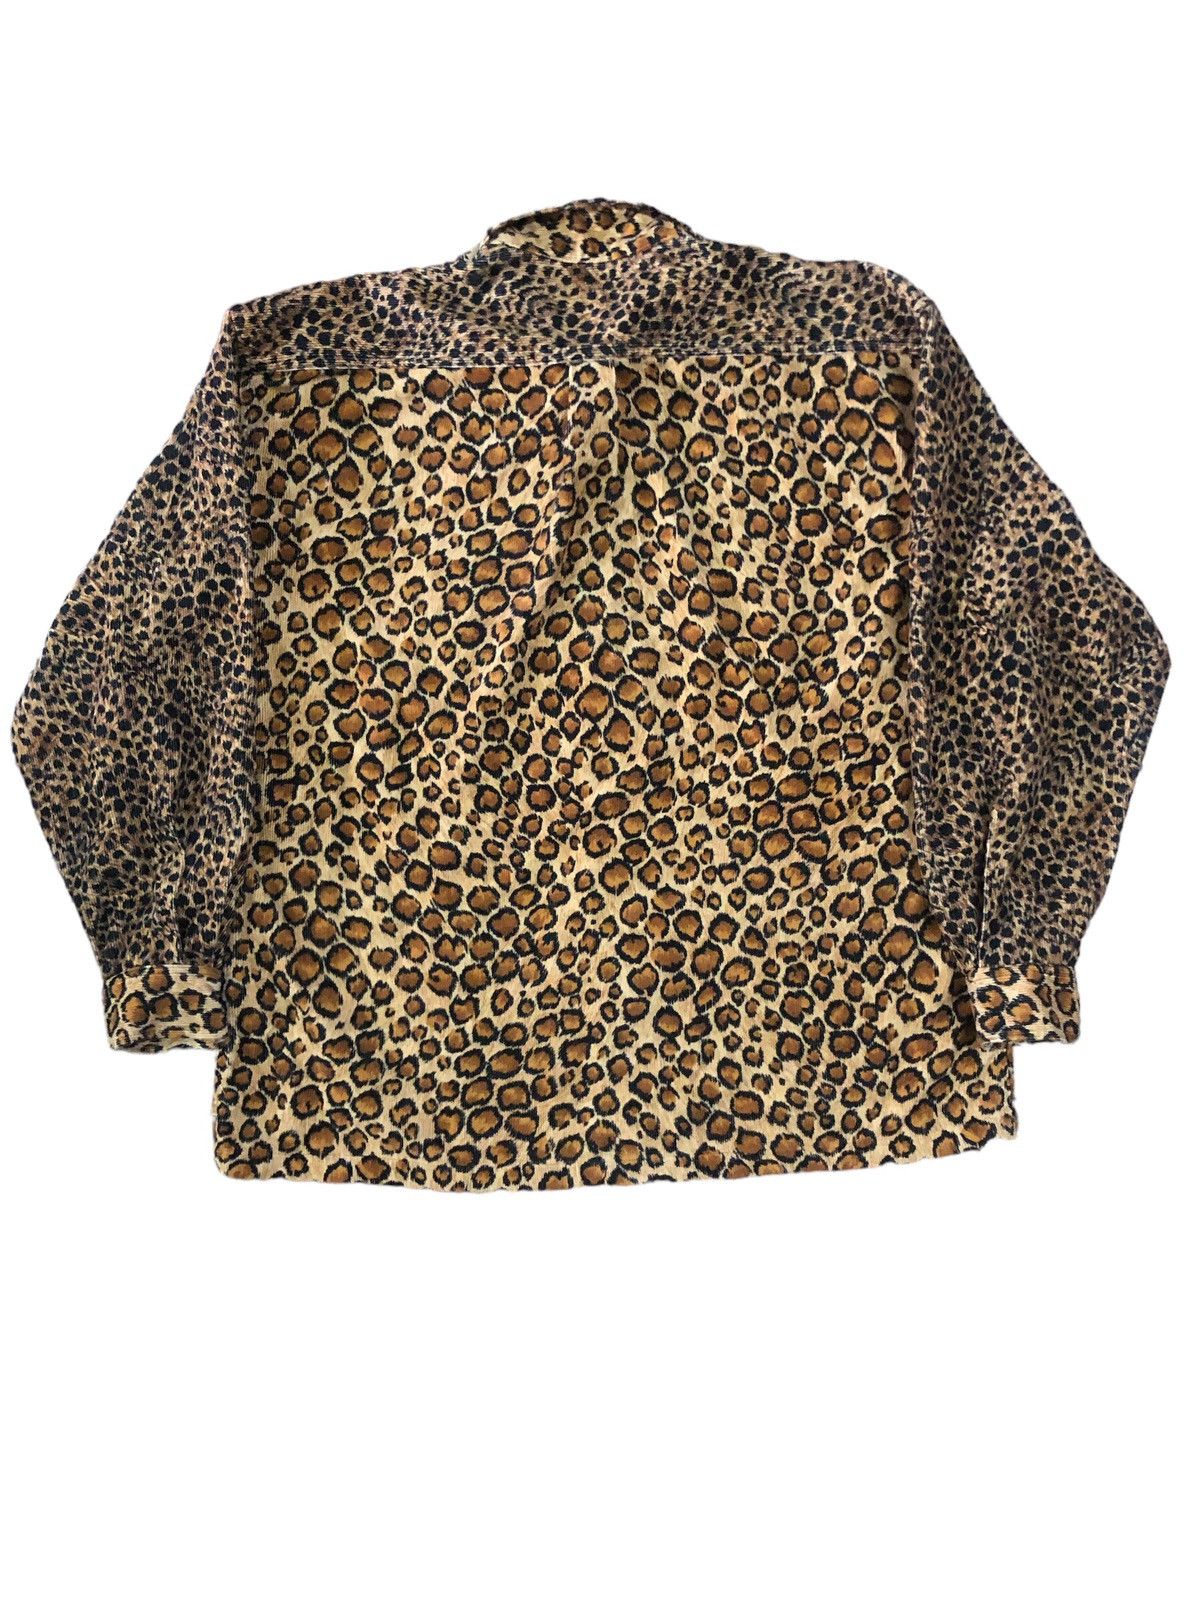 Japanese Brand - Amihyatt Leopard Print button ups jacket - 2